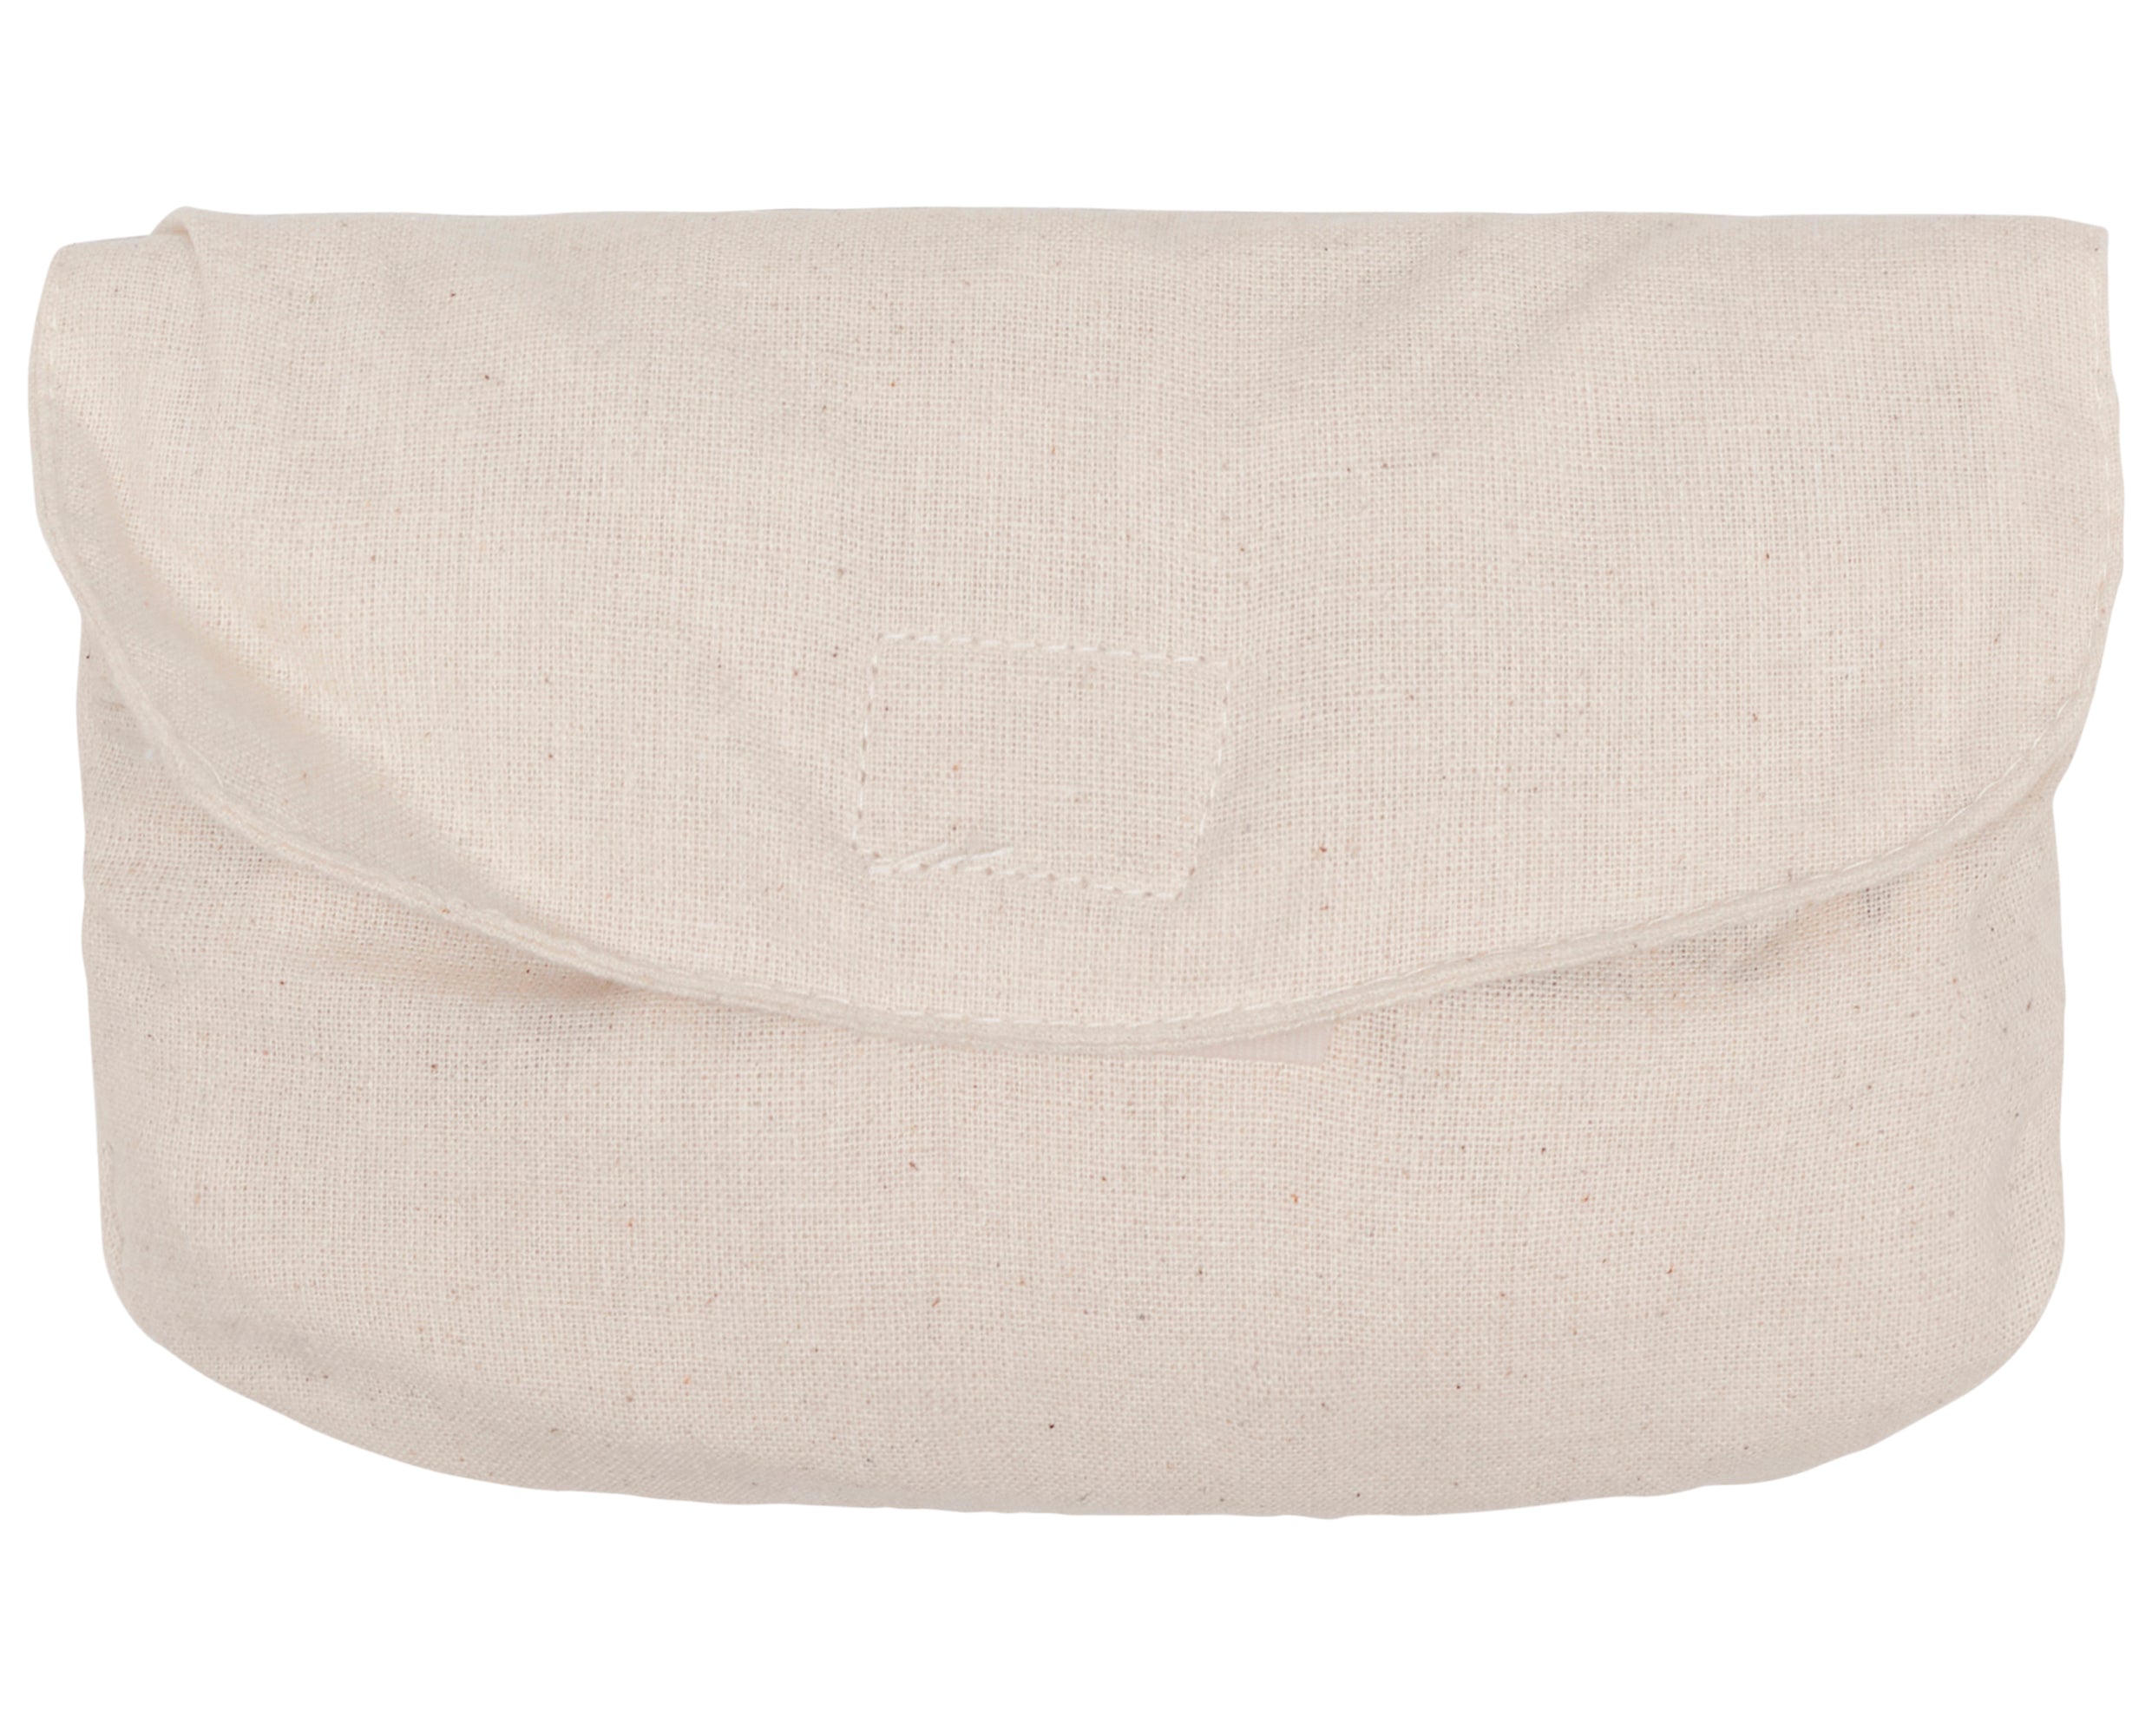 100% organic cotton tote bag - Natural